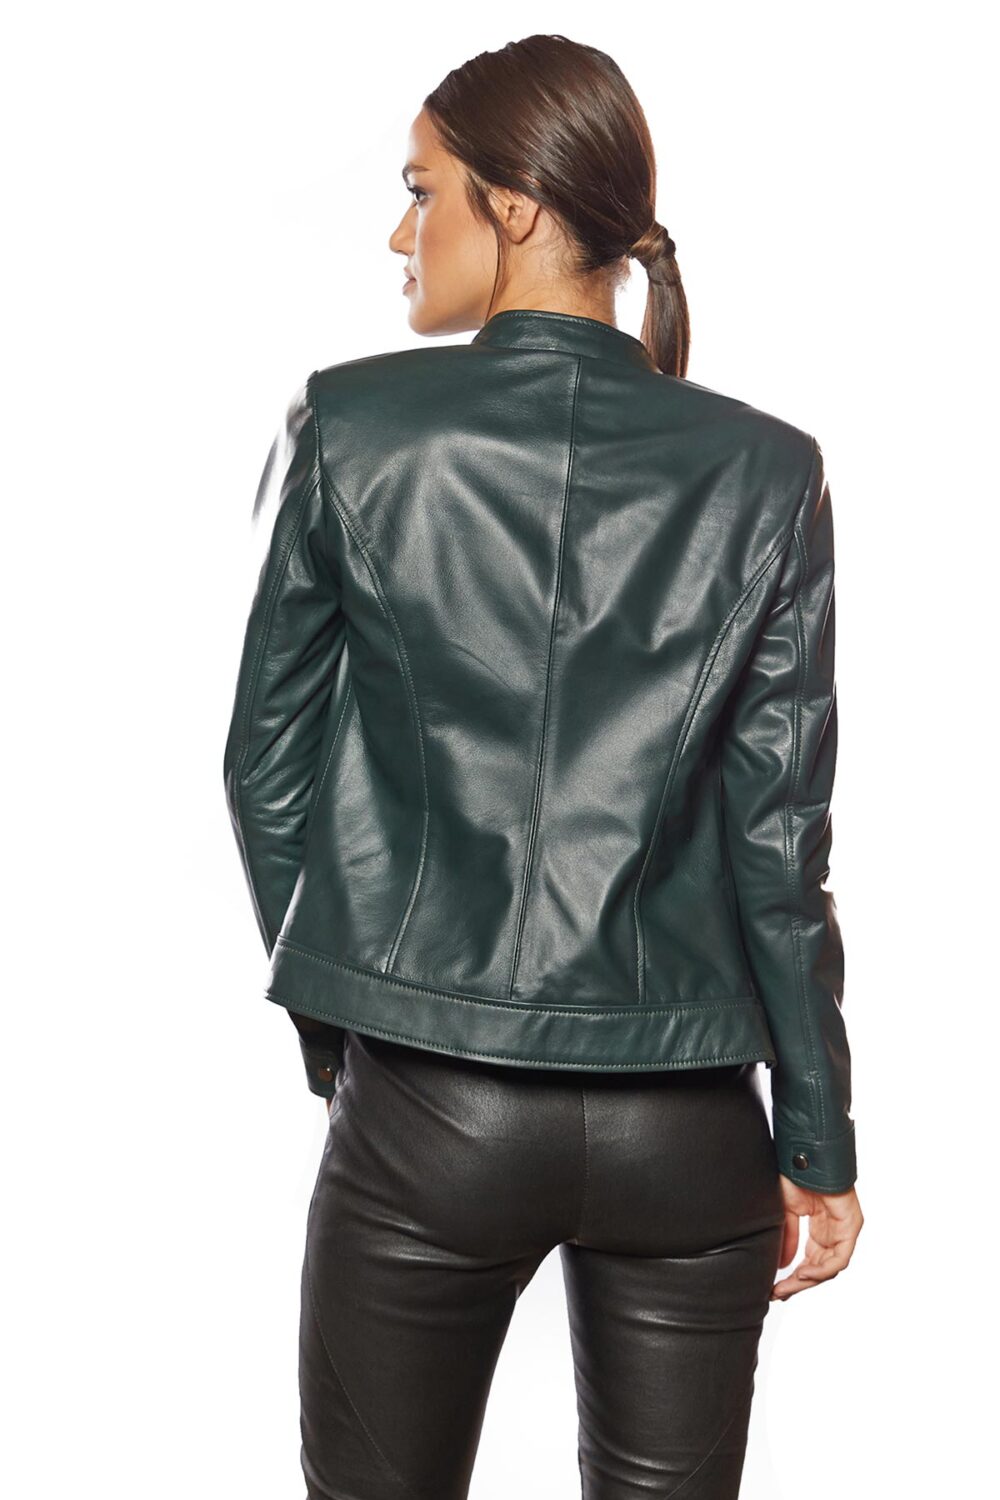 Women’s Green Leather Jacket Slim Fit